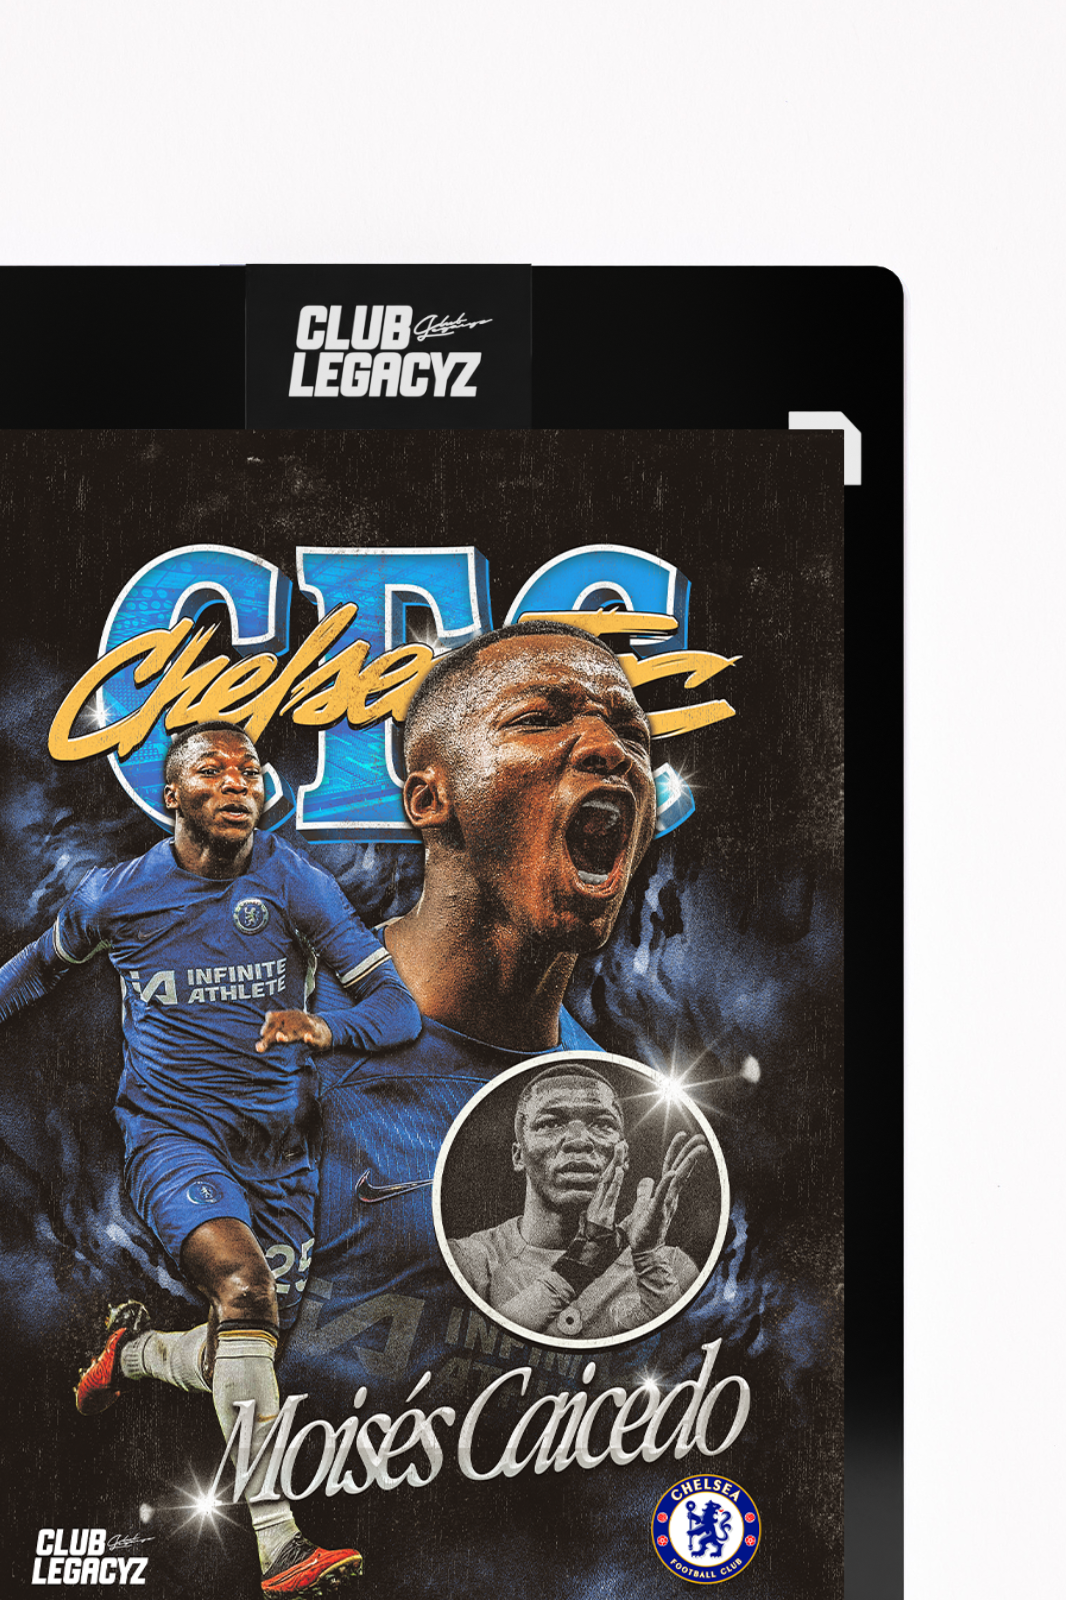 Chelsea FC - Moisés Caicedo Bootleg Icon limited to 100